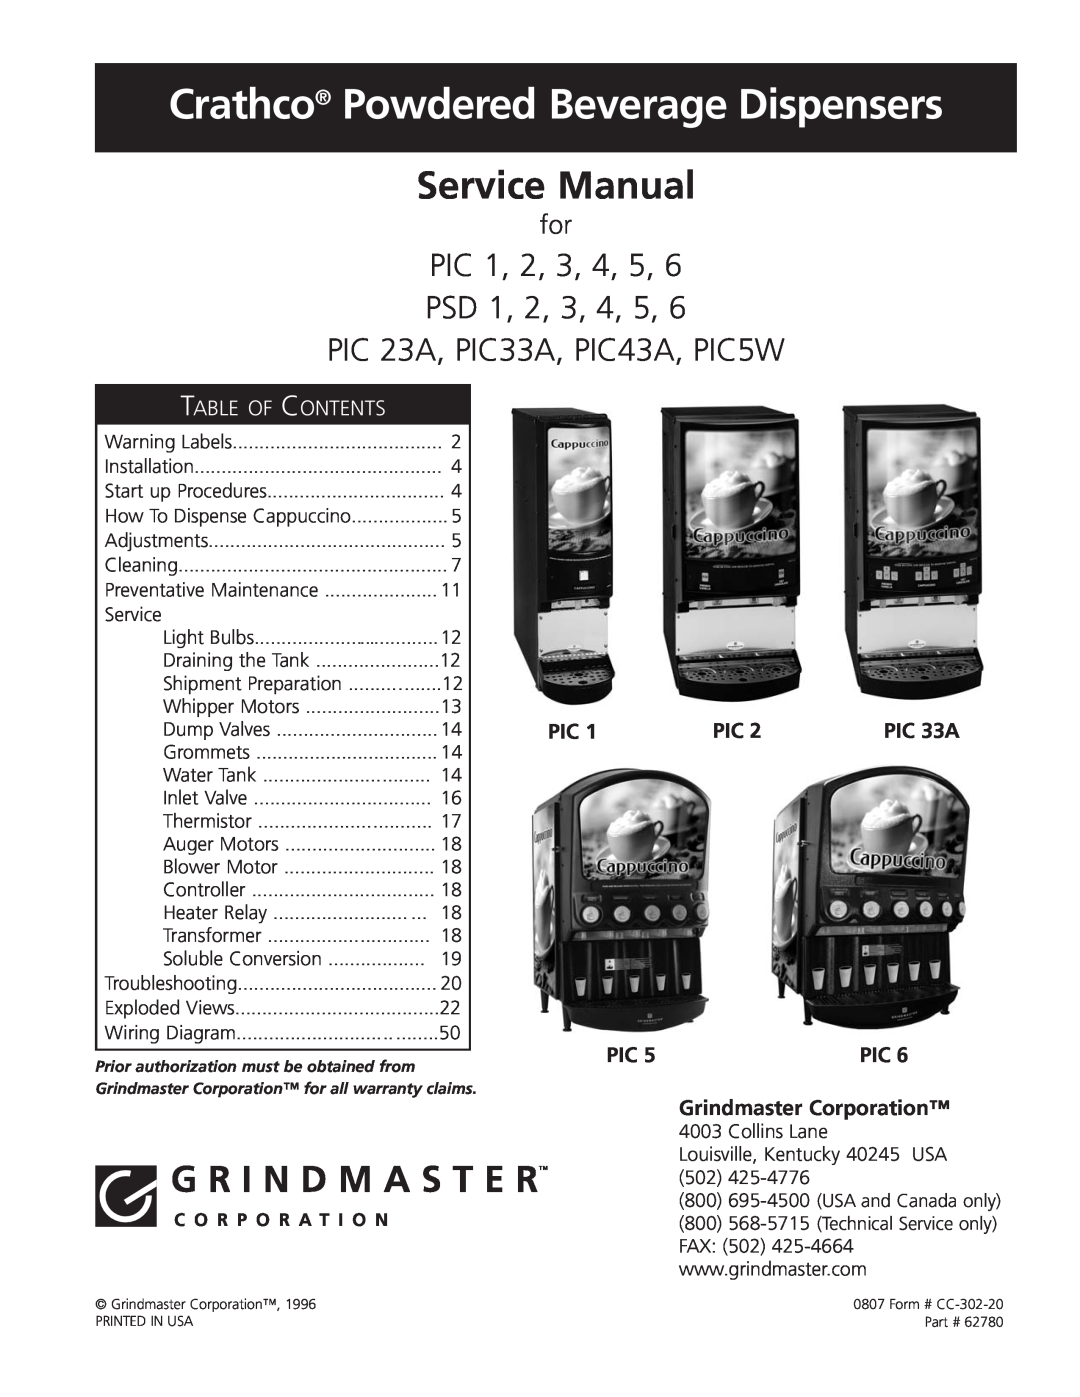 Grindmaster CC-302-20 service manual Grindmaster Corporation, PIC 33A, Crathco Powdered Beverage Dispensers 